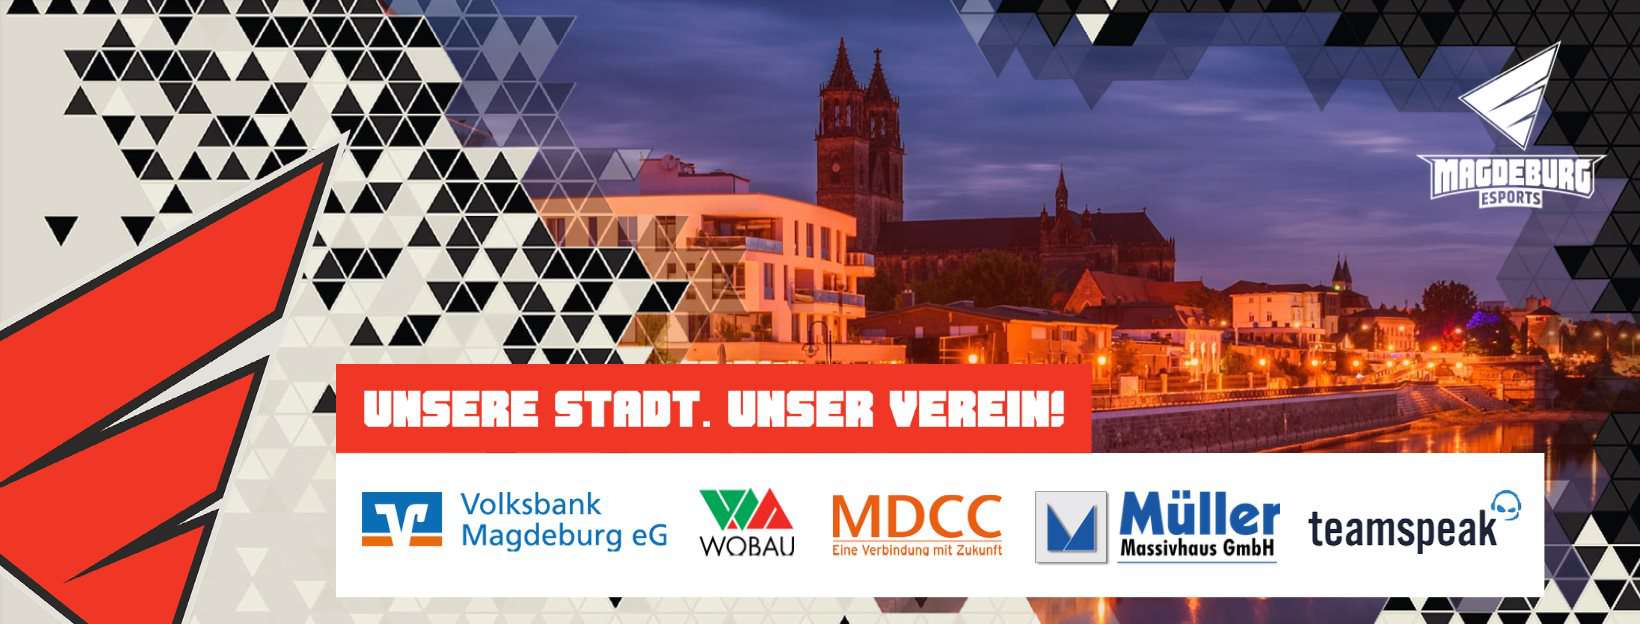 Magdeburg esport banner